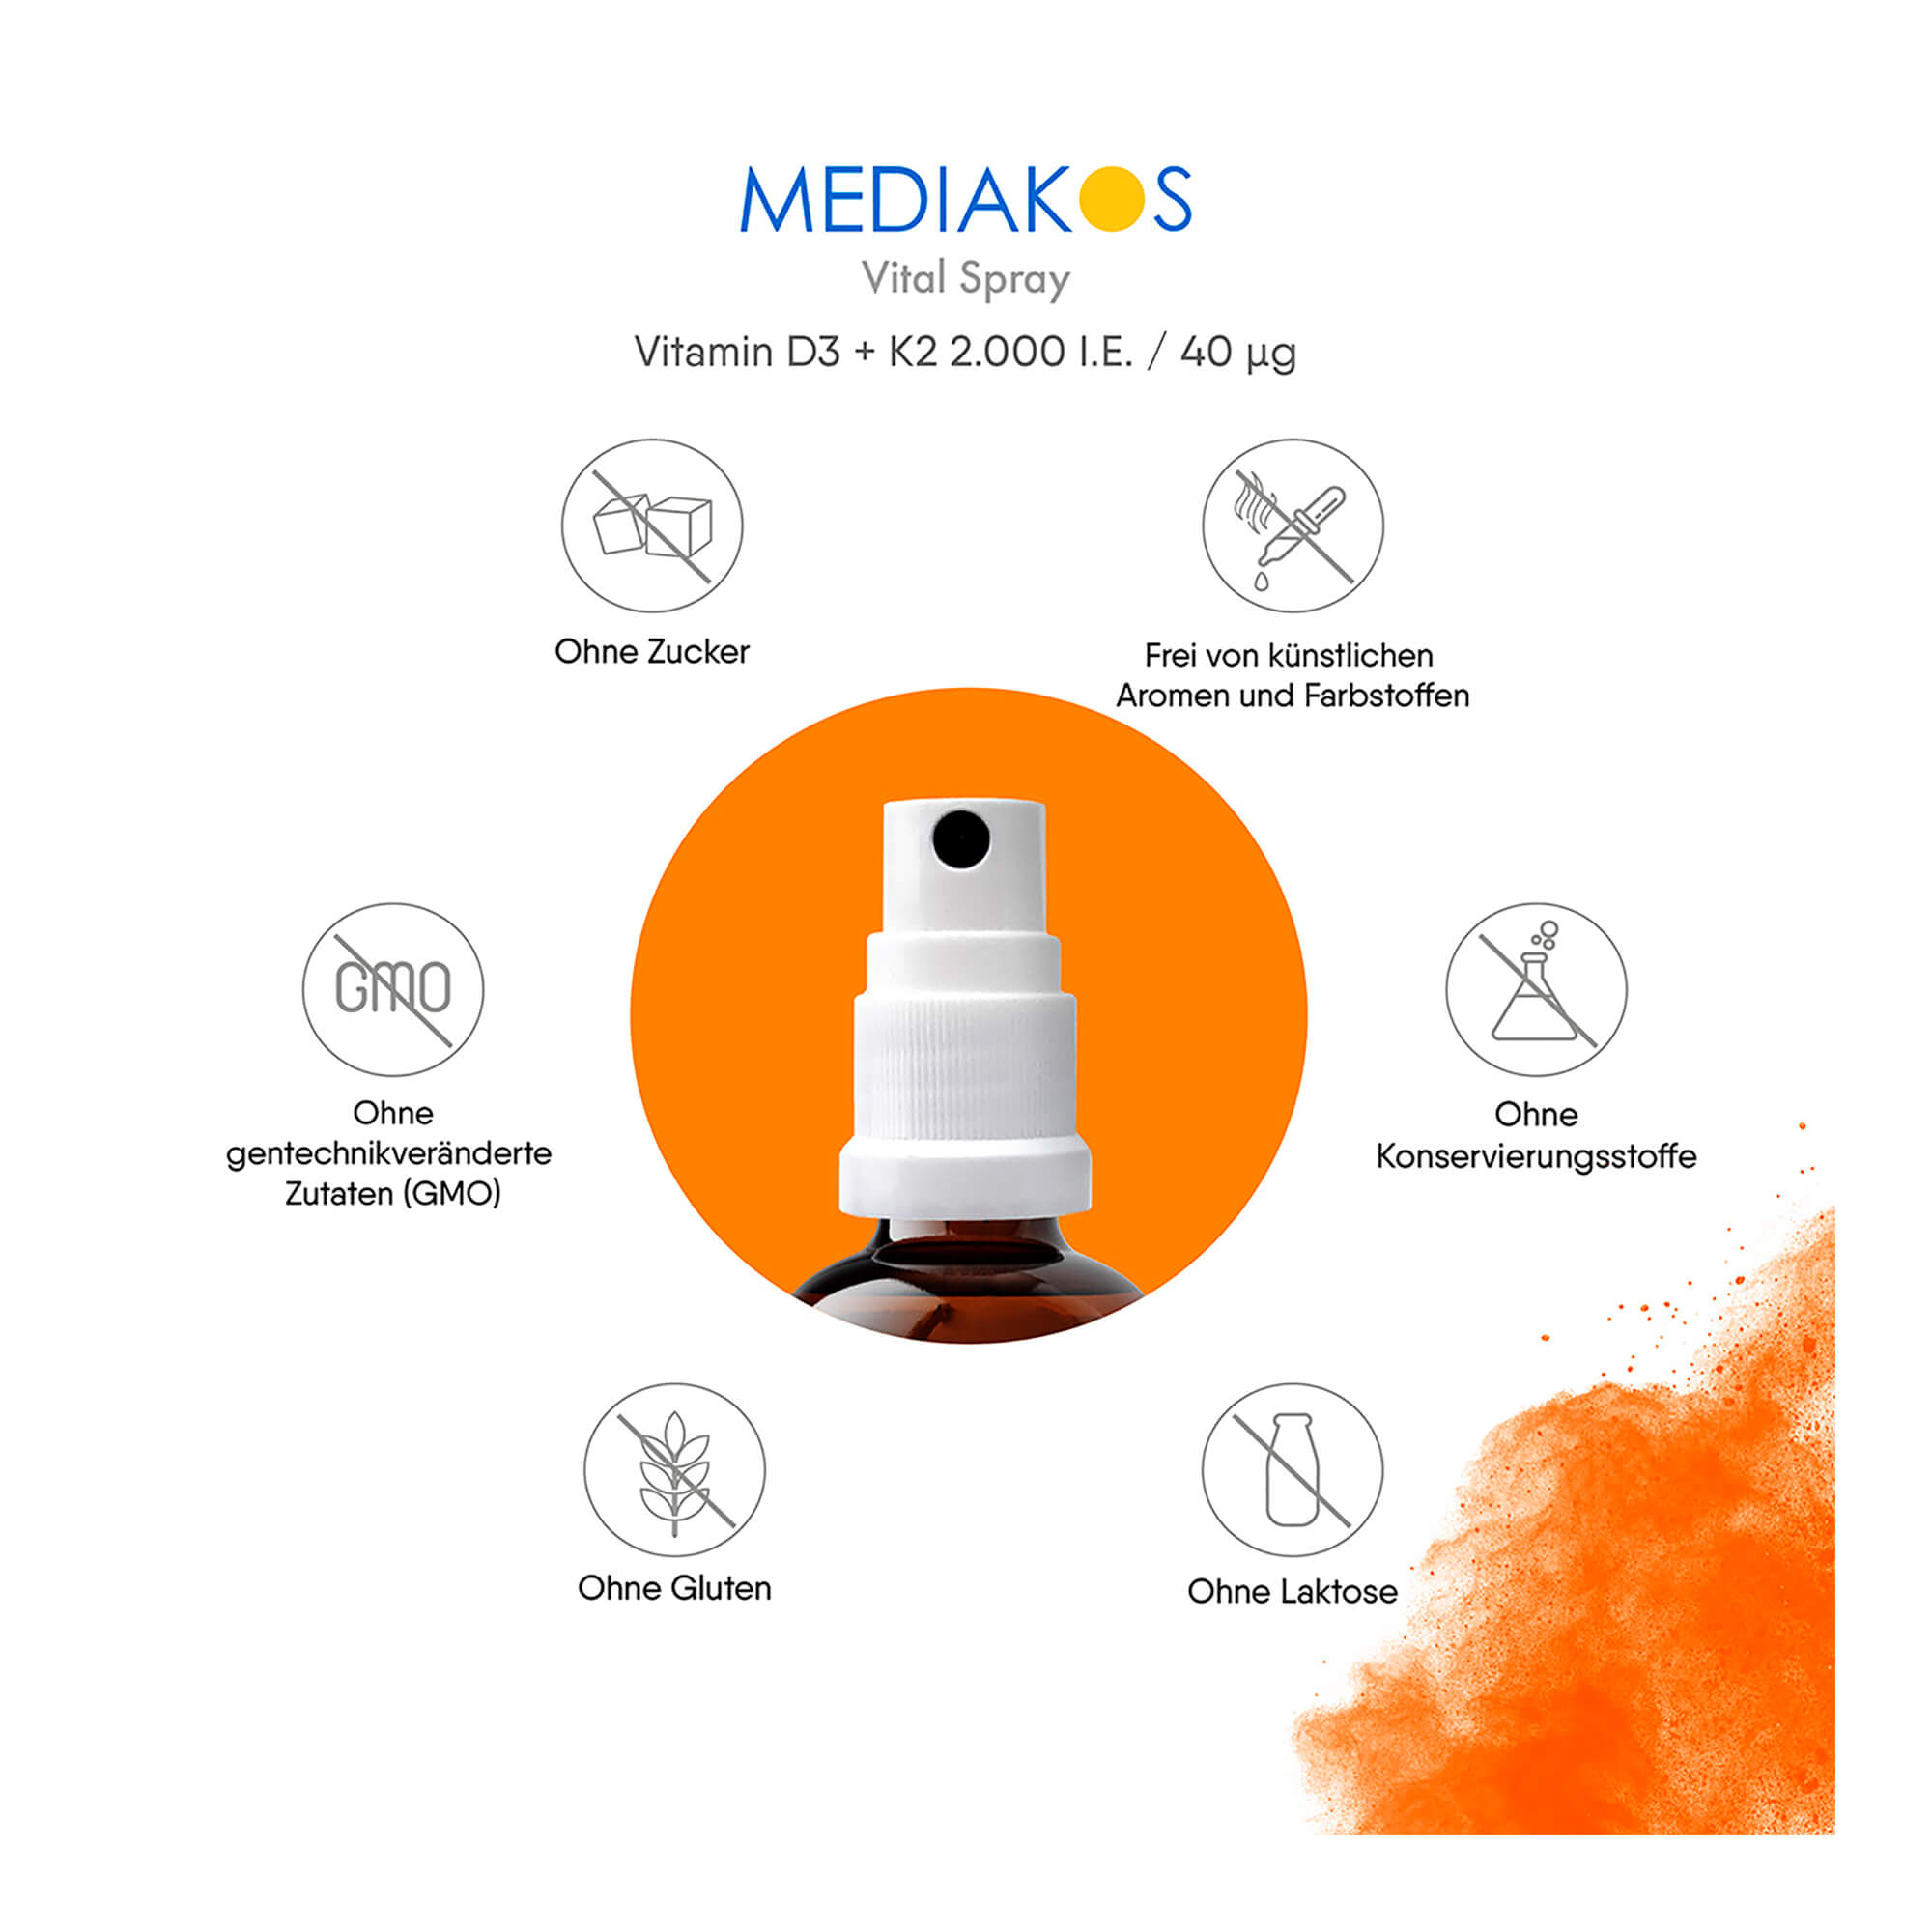 Mediakos Vitamin D3+K2 Vital Spray wichtige Hinweise